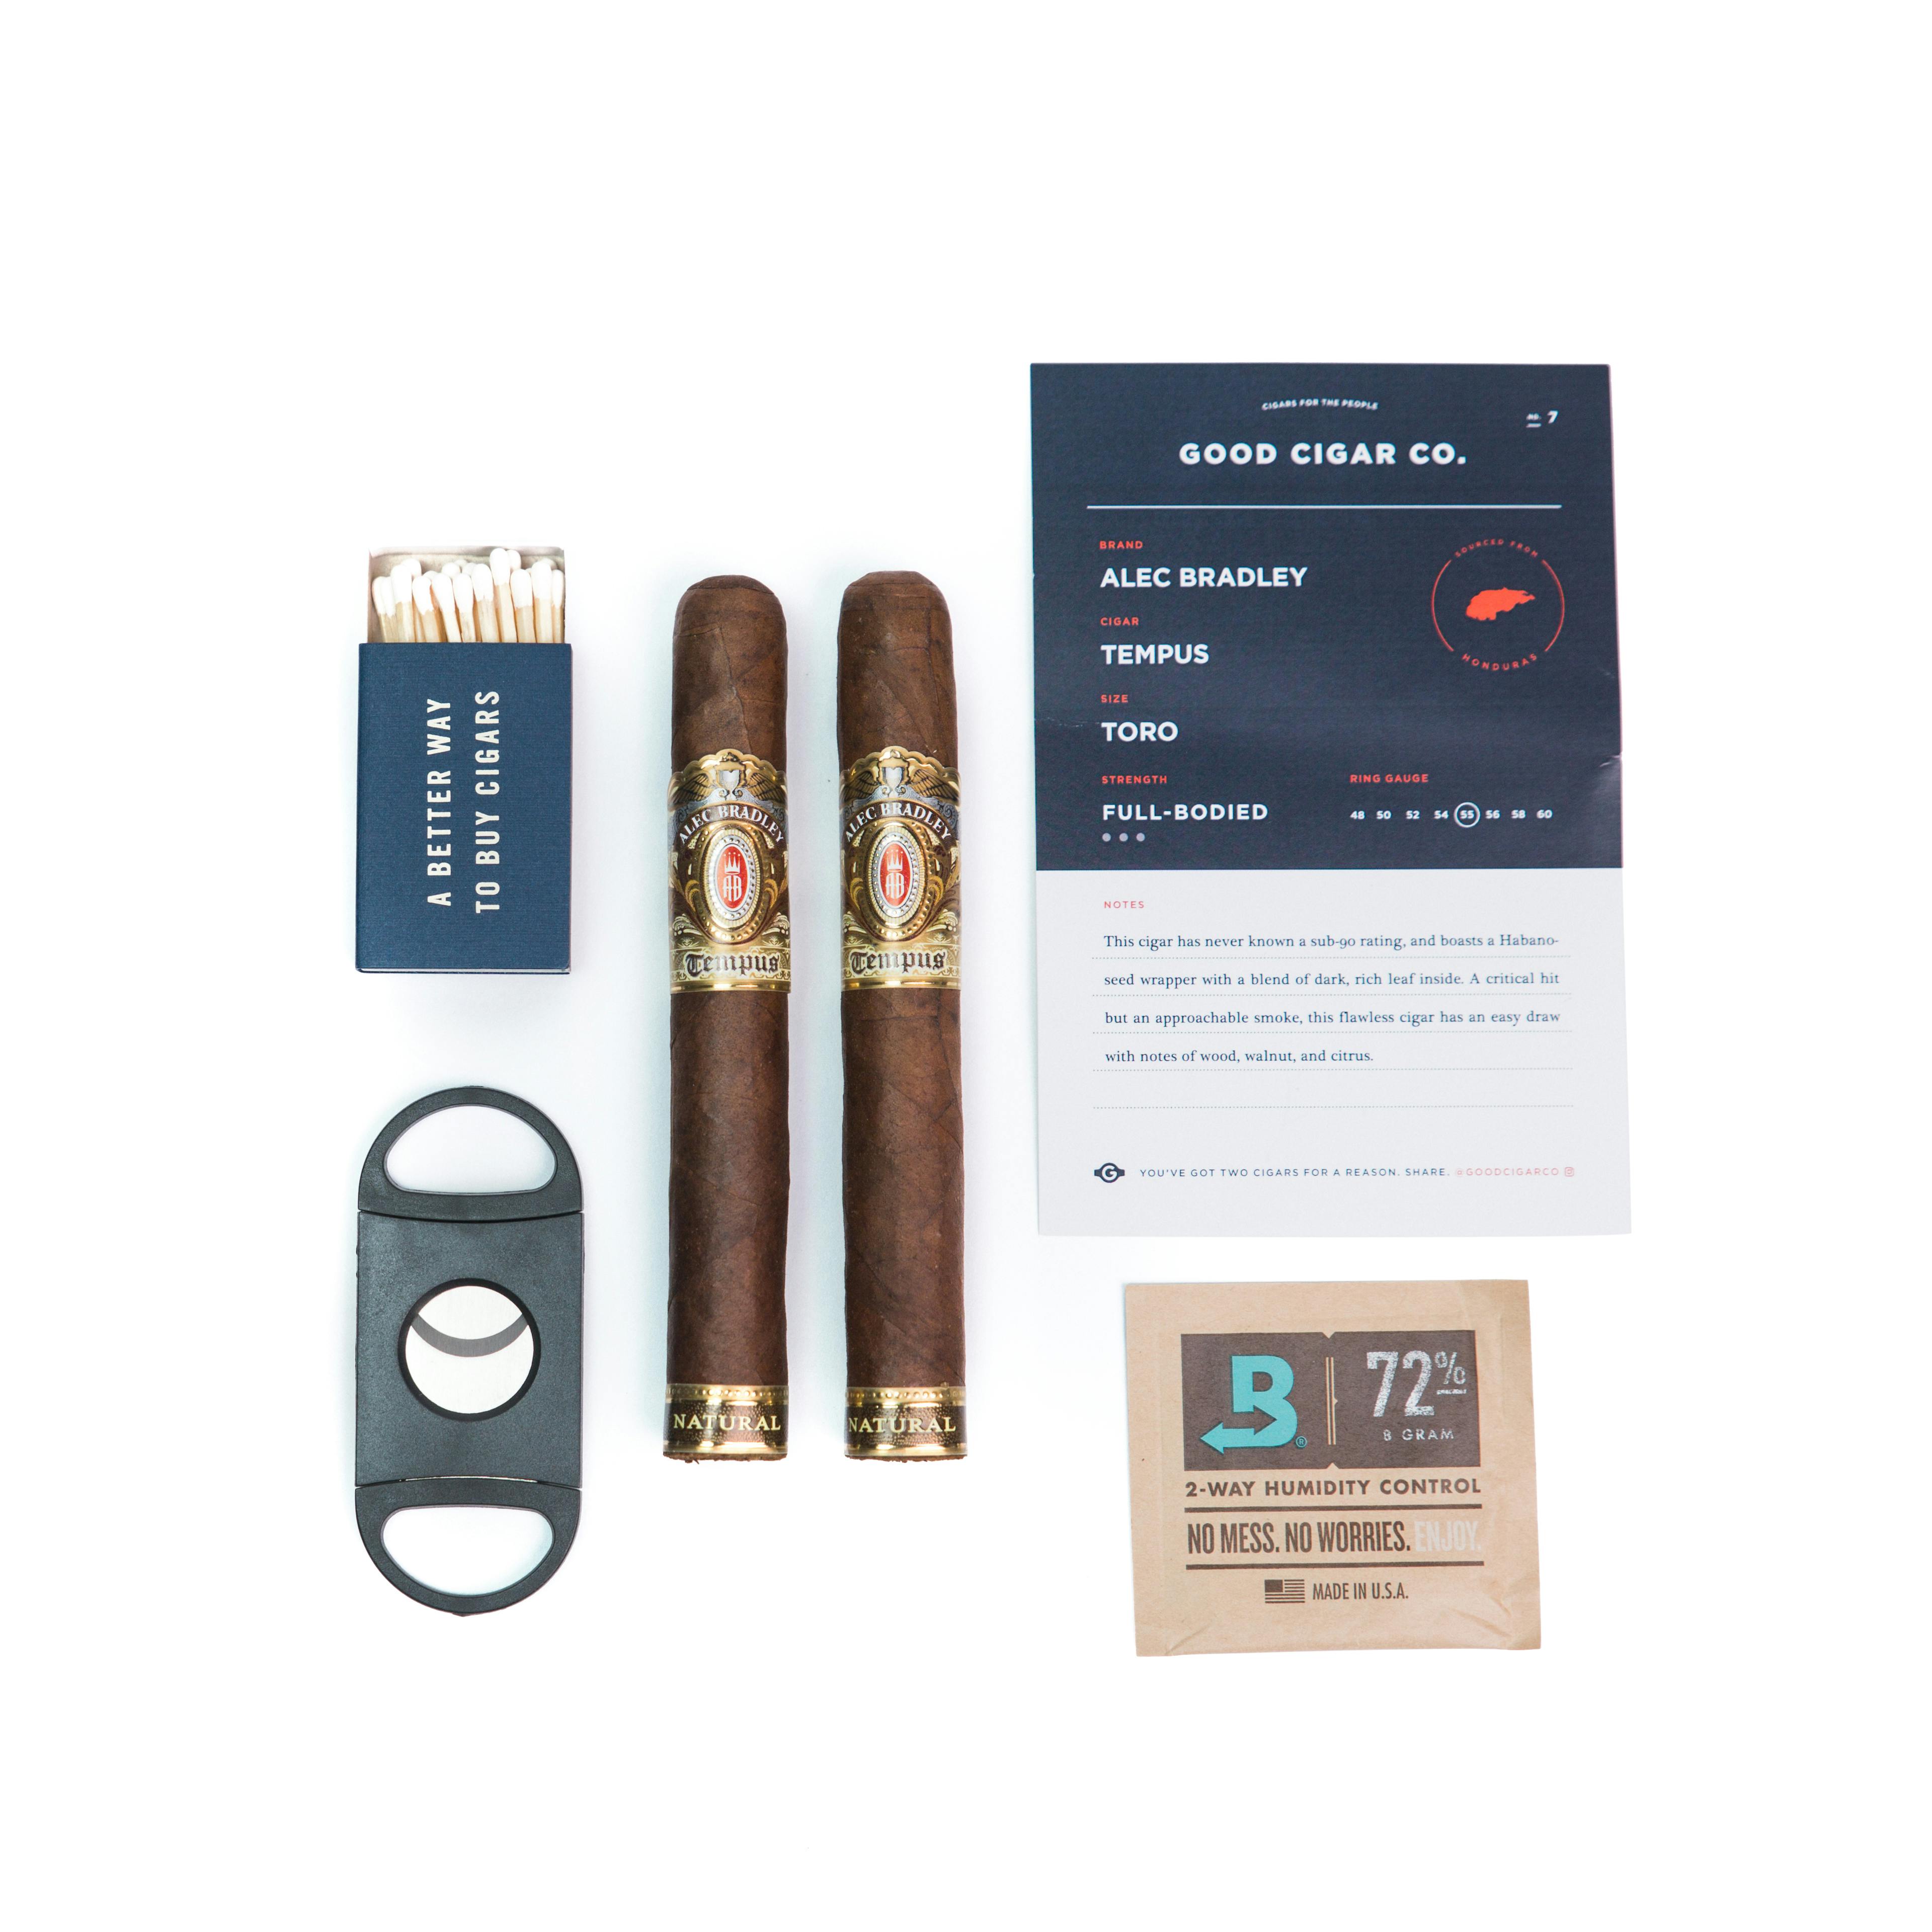 Good Cigar Co. 2 Pack of Cigars - Apex (Mild)